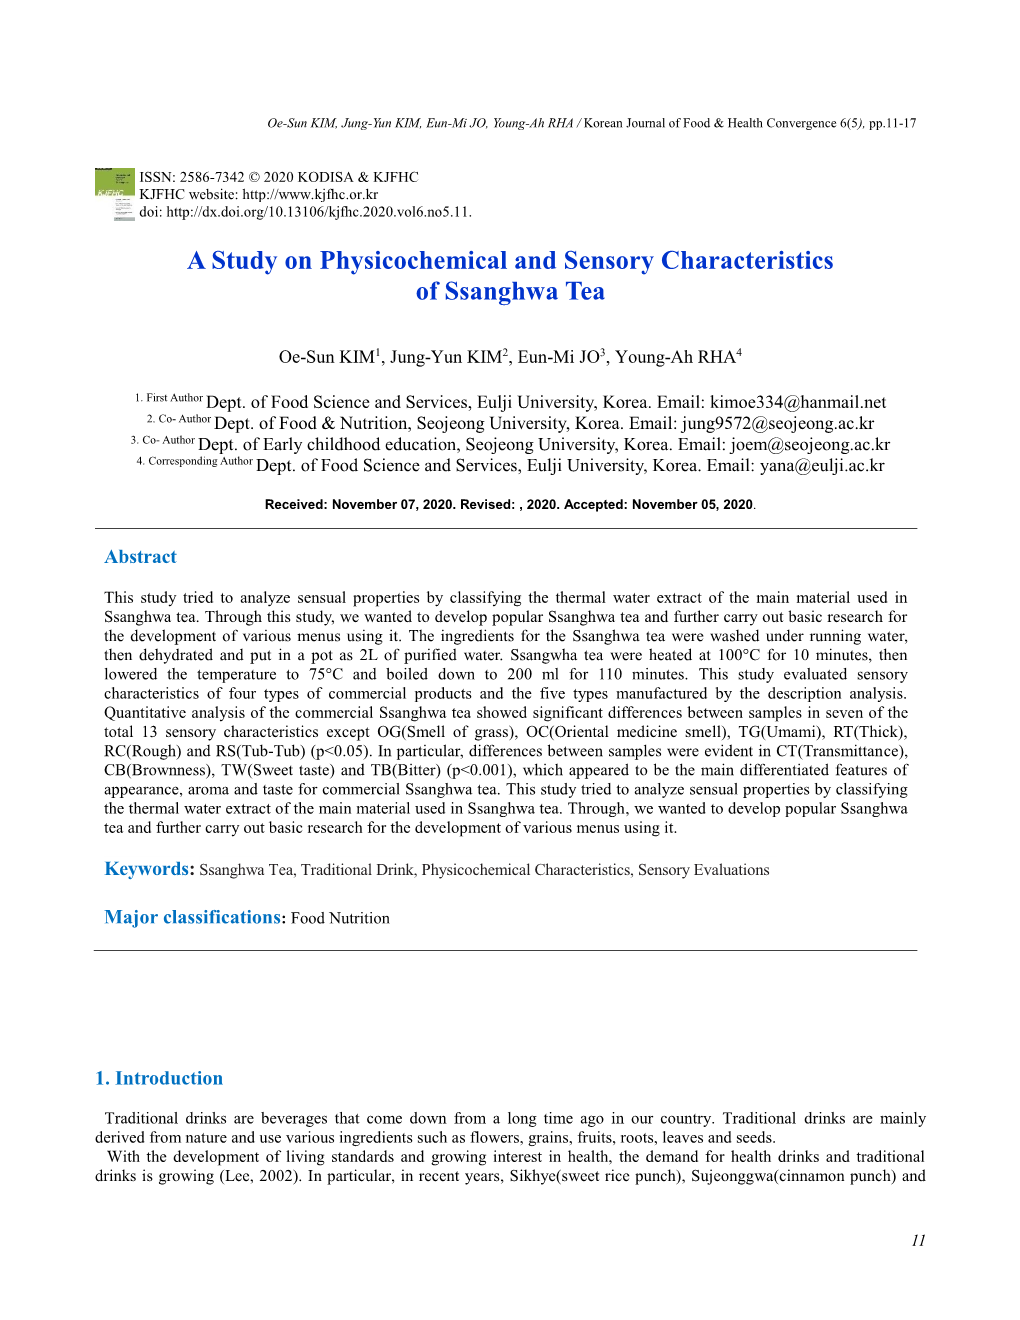 A Study on Physicochemical and Sensory Characteristics of Ssanghwa Tea